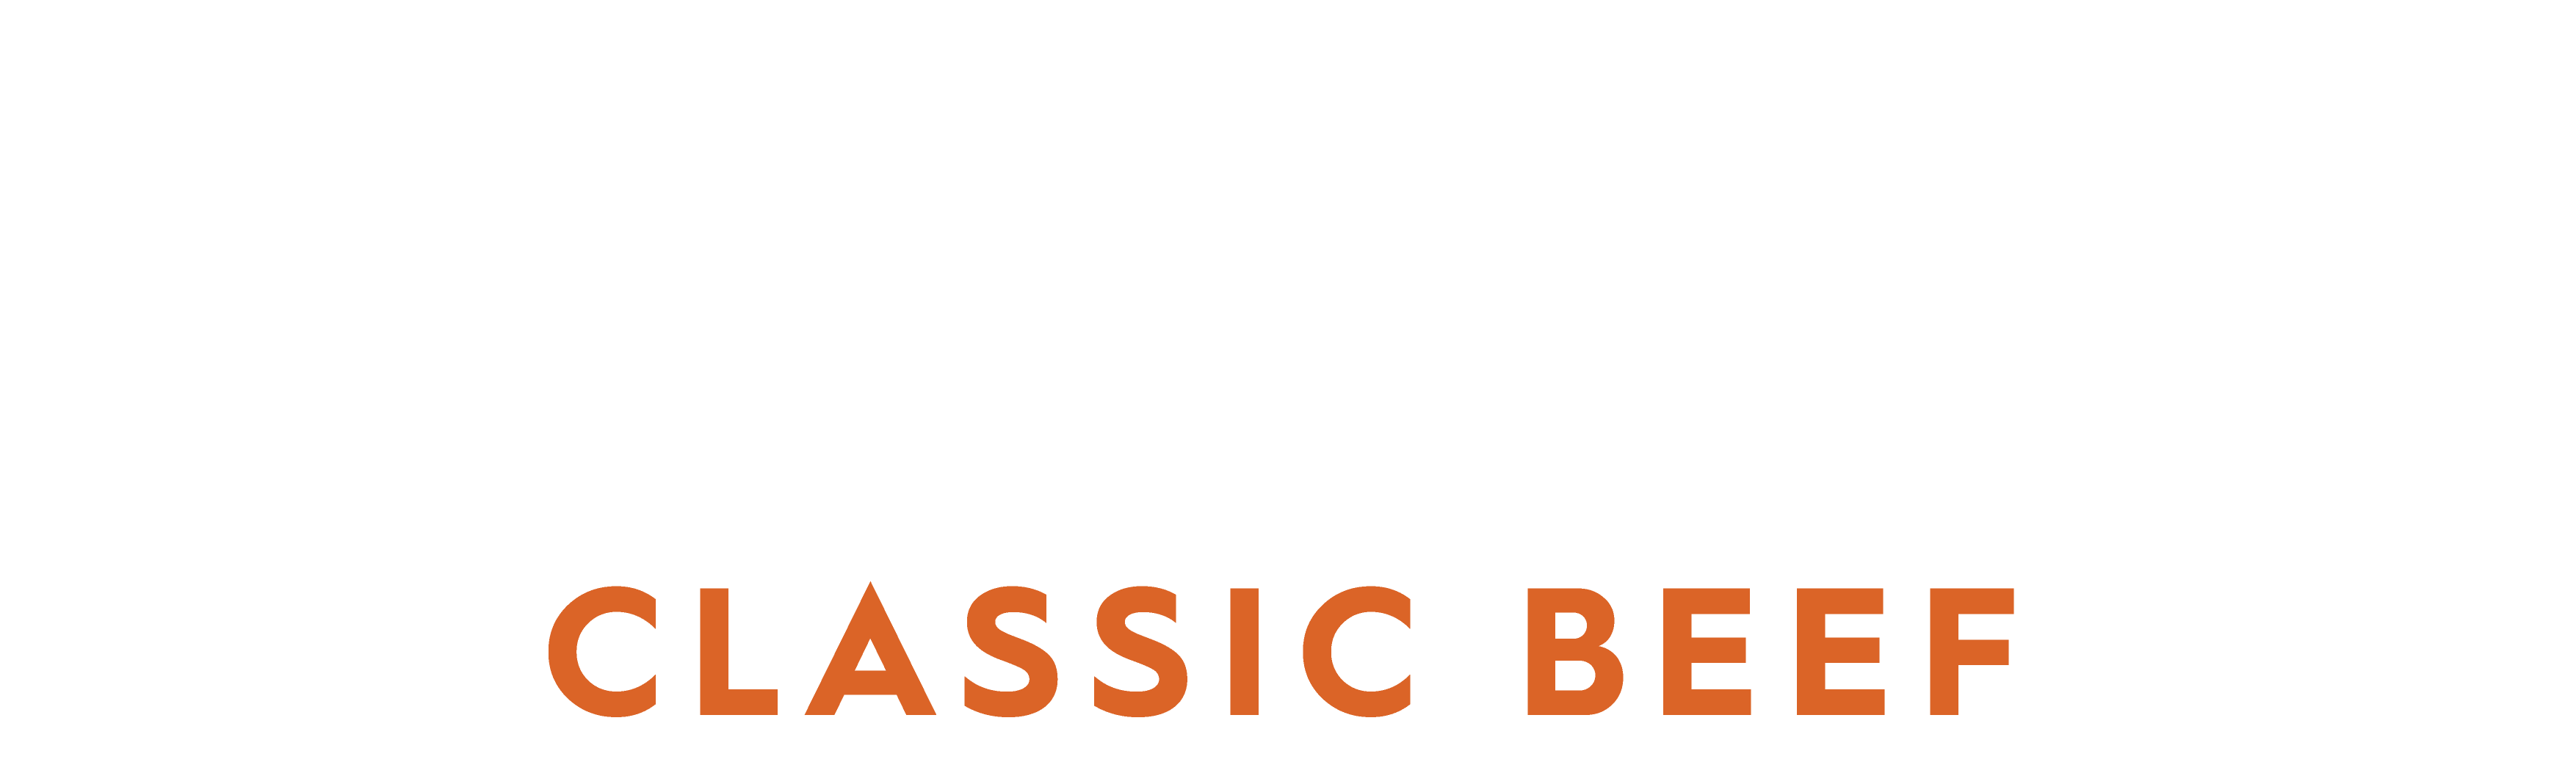 Diamantina Classic Beef logo